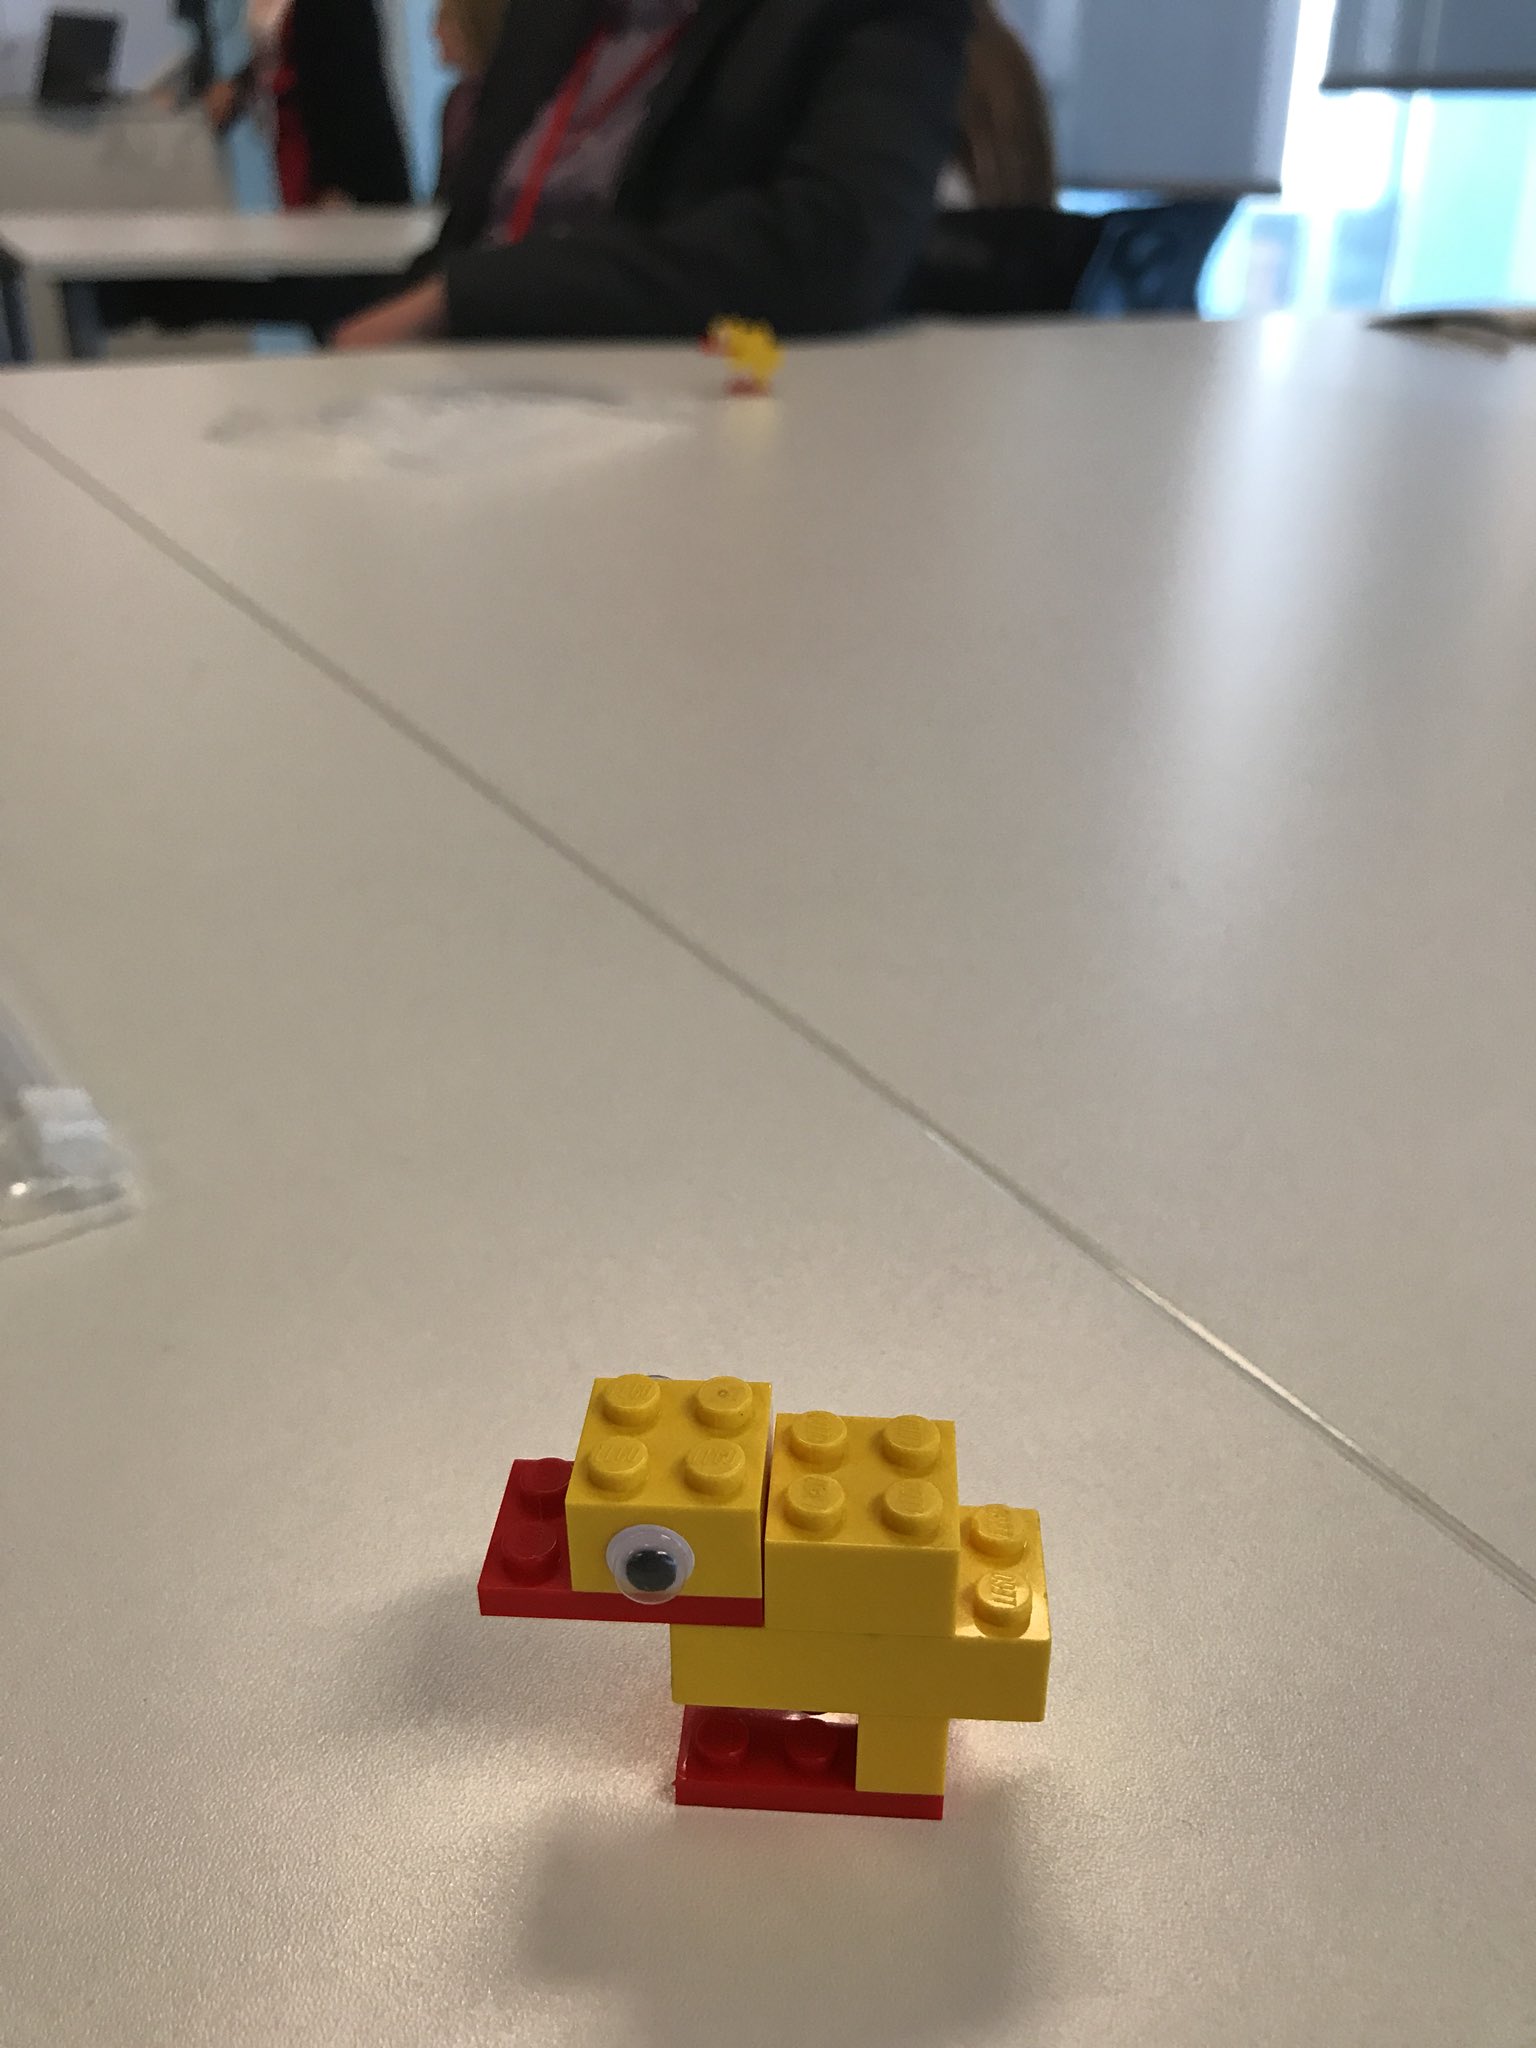 Ducks and problem solving #SocMedHE17 #LegoSeriousPlay https://t.co/Cn7SfzqnsN